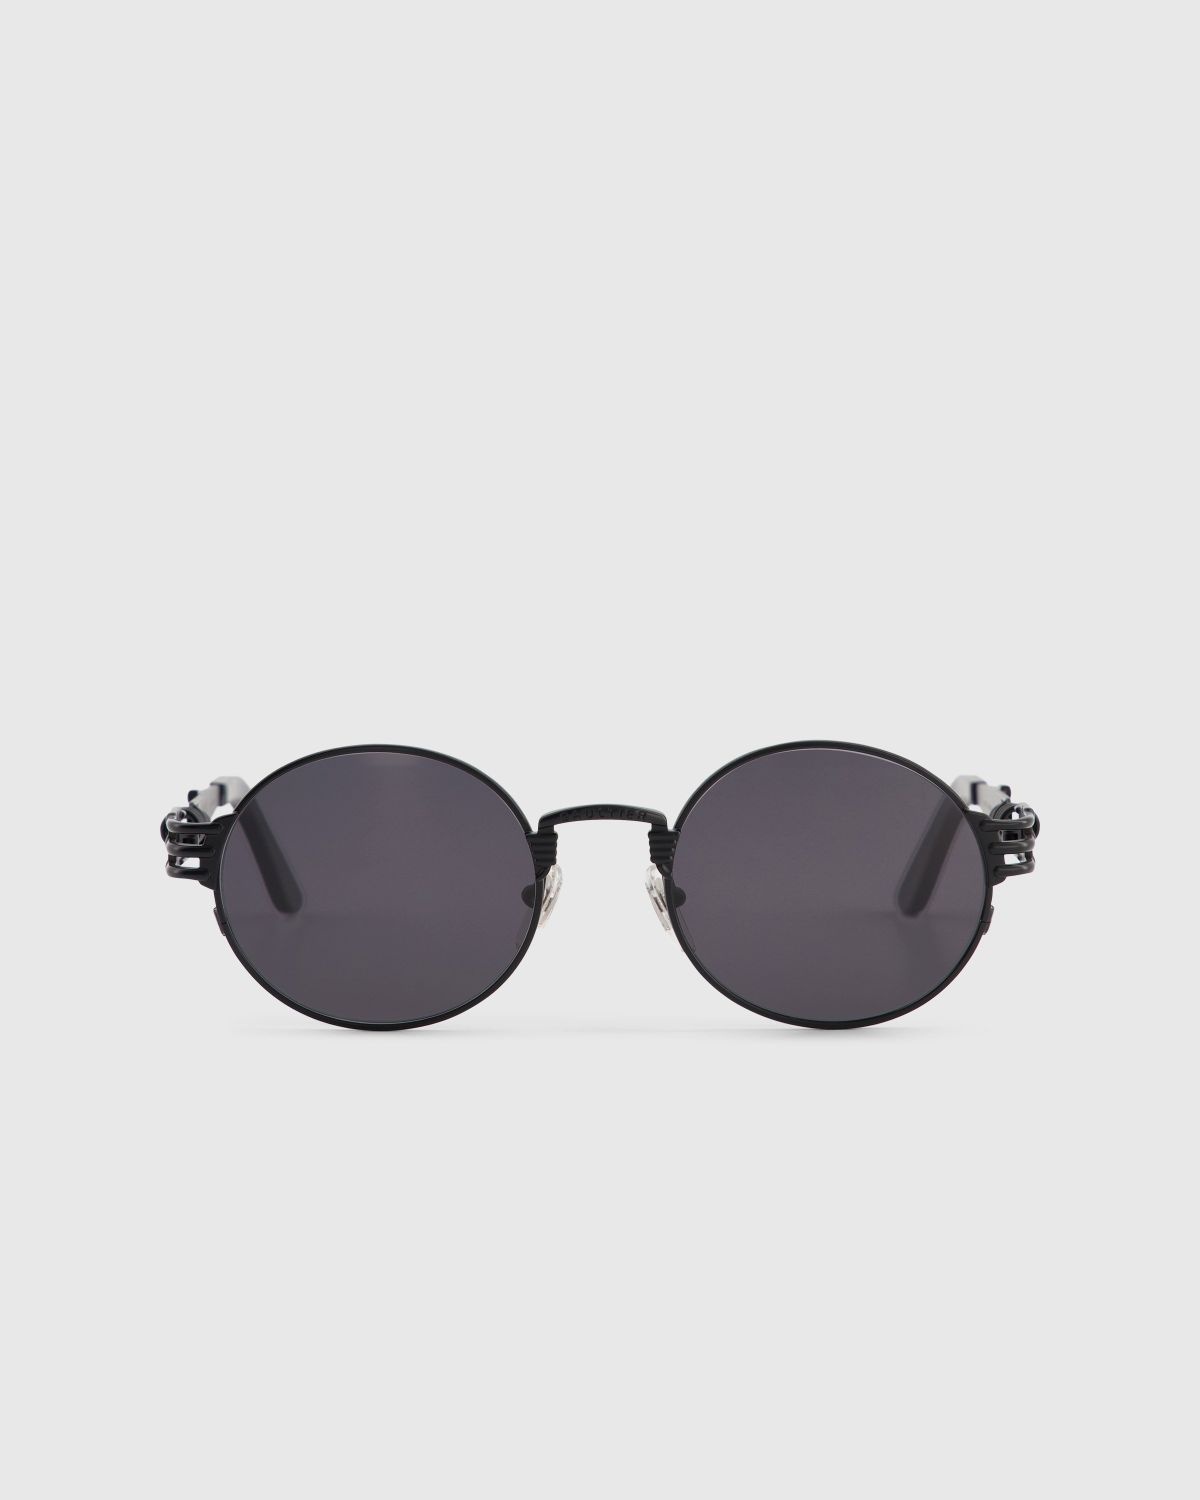 Jean Paul Gaultier x Burna Boy – 56-6106 Double Resort Sunglasses Black - 1